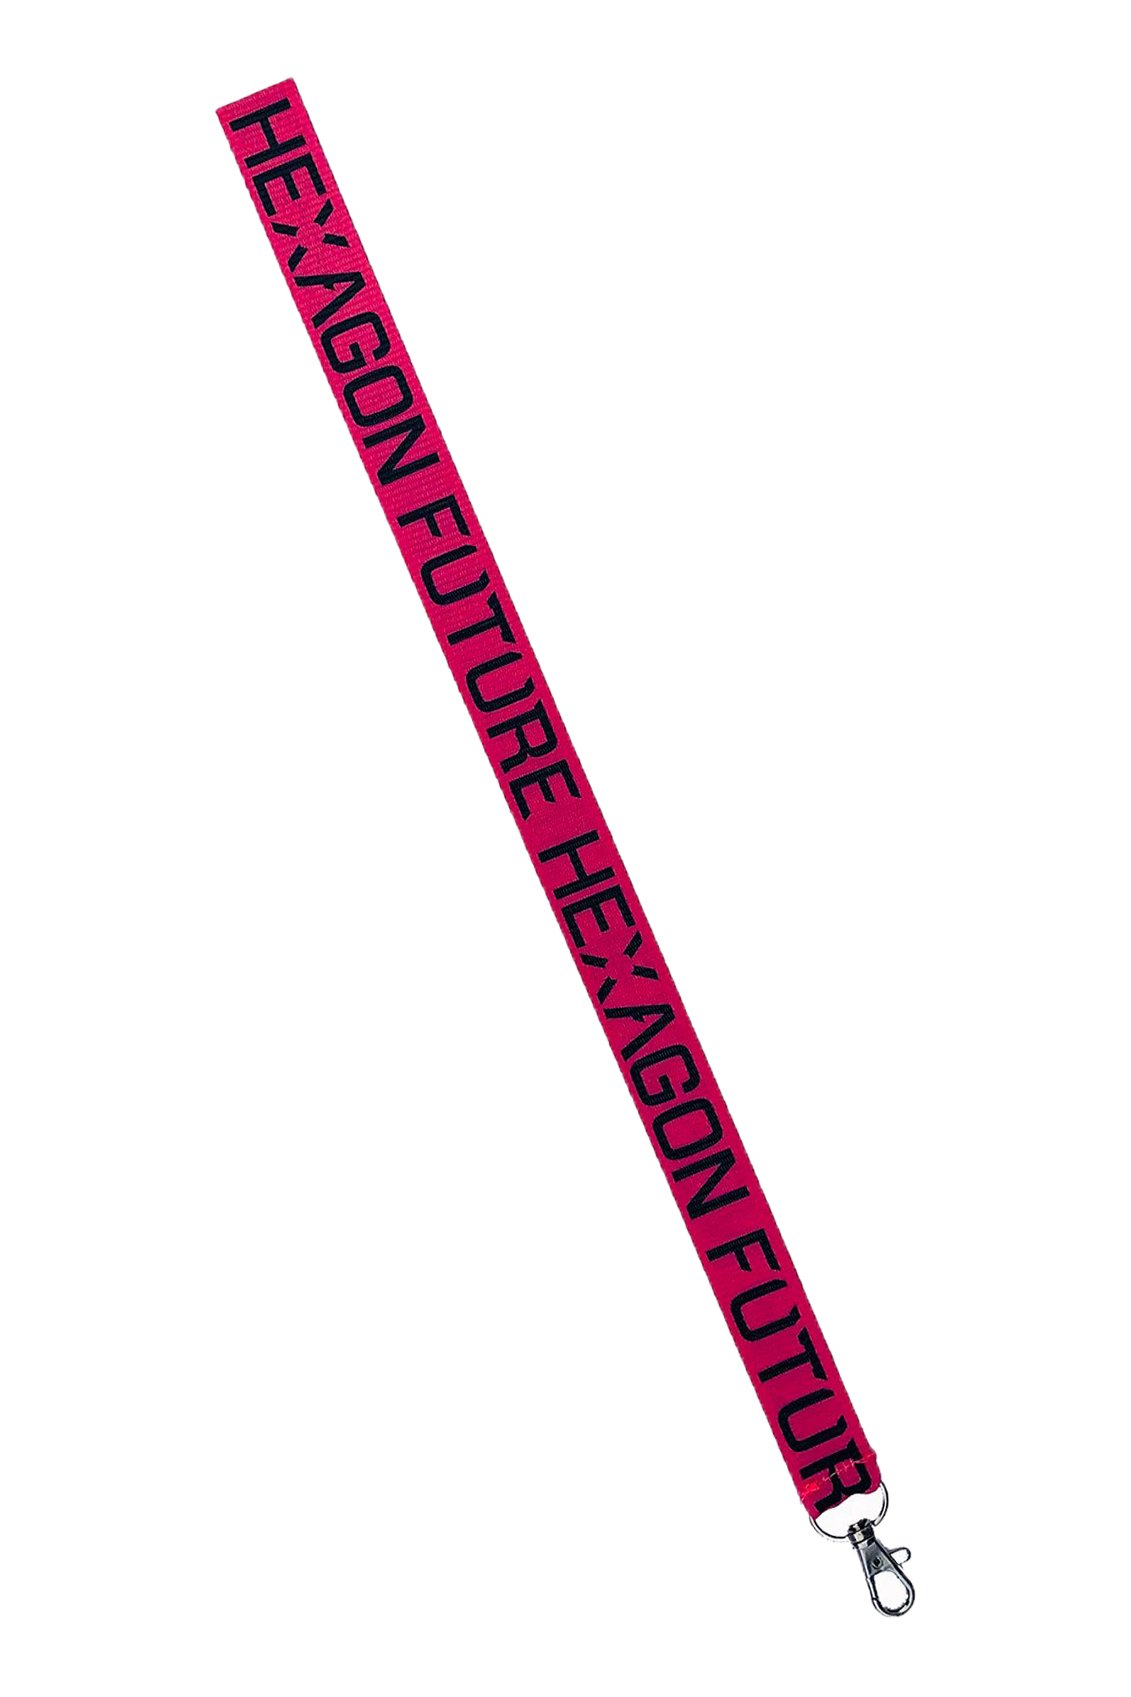 Lanyard Long Pink, length 75cm - HEXAGON - Don Diablo - Hexagon